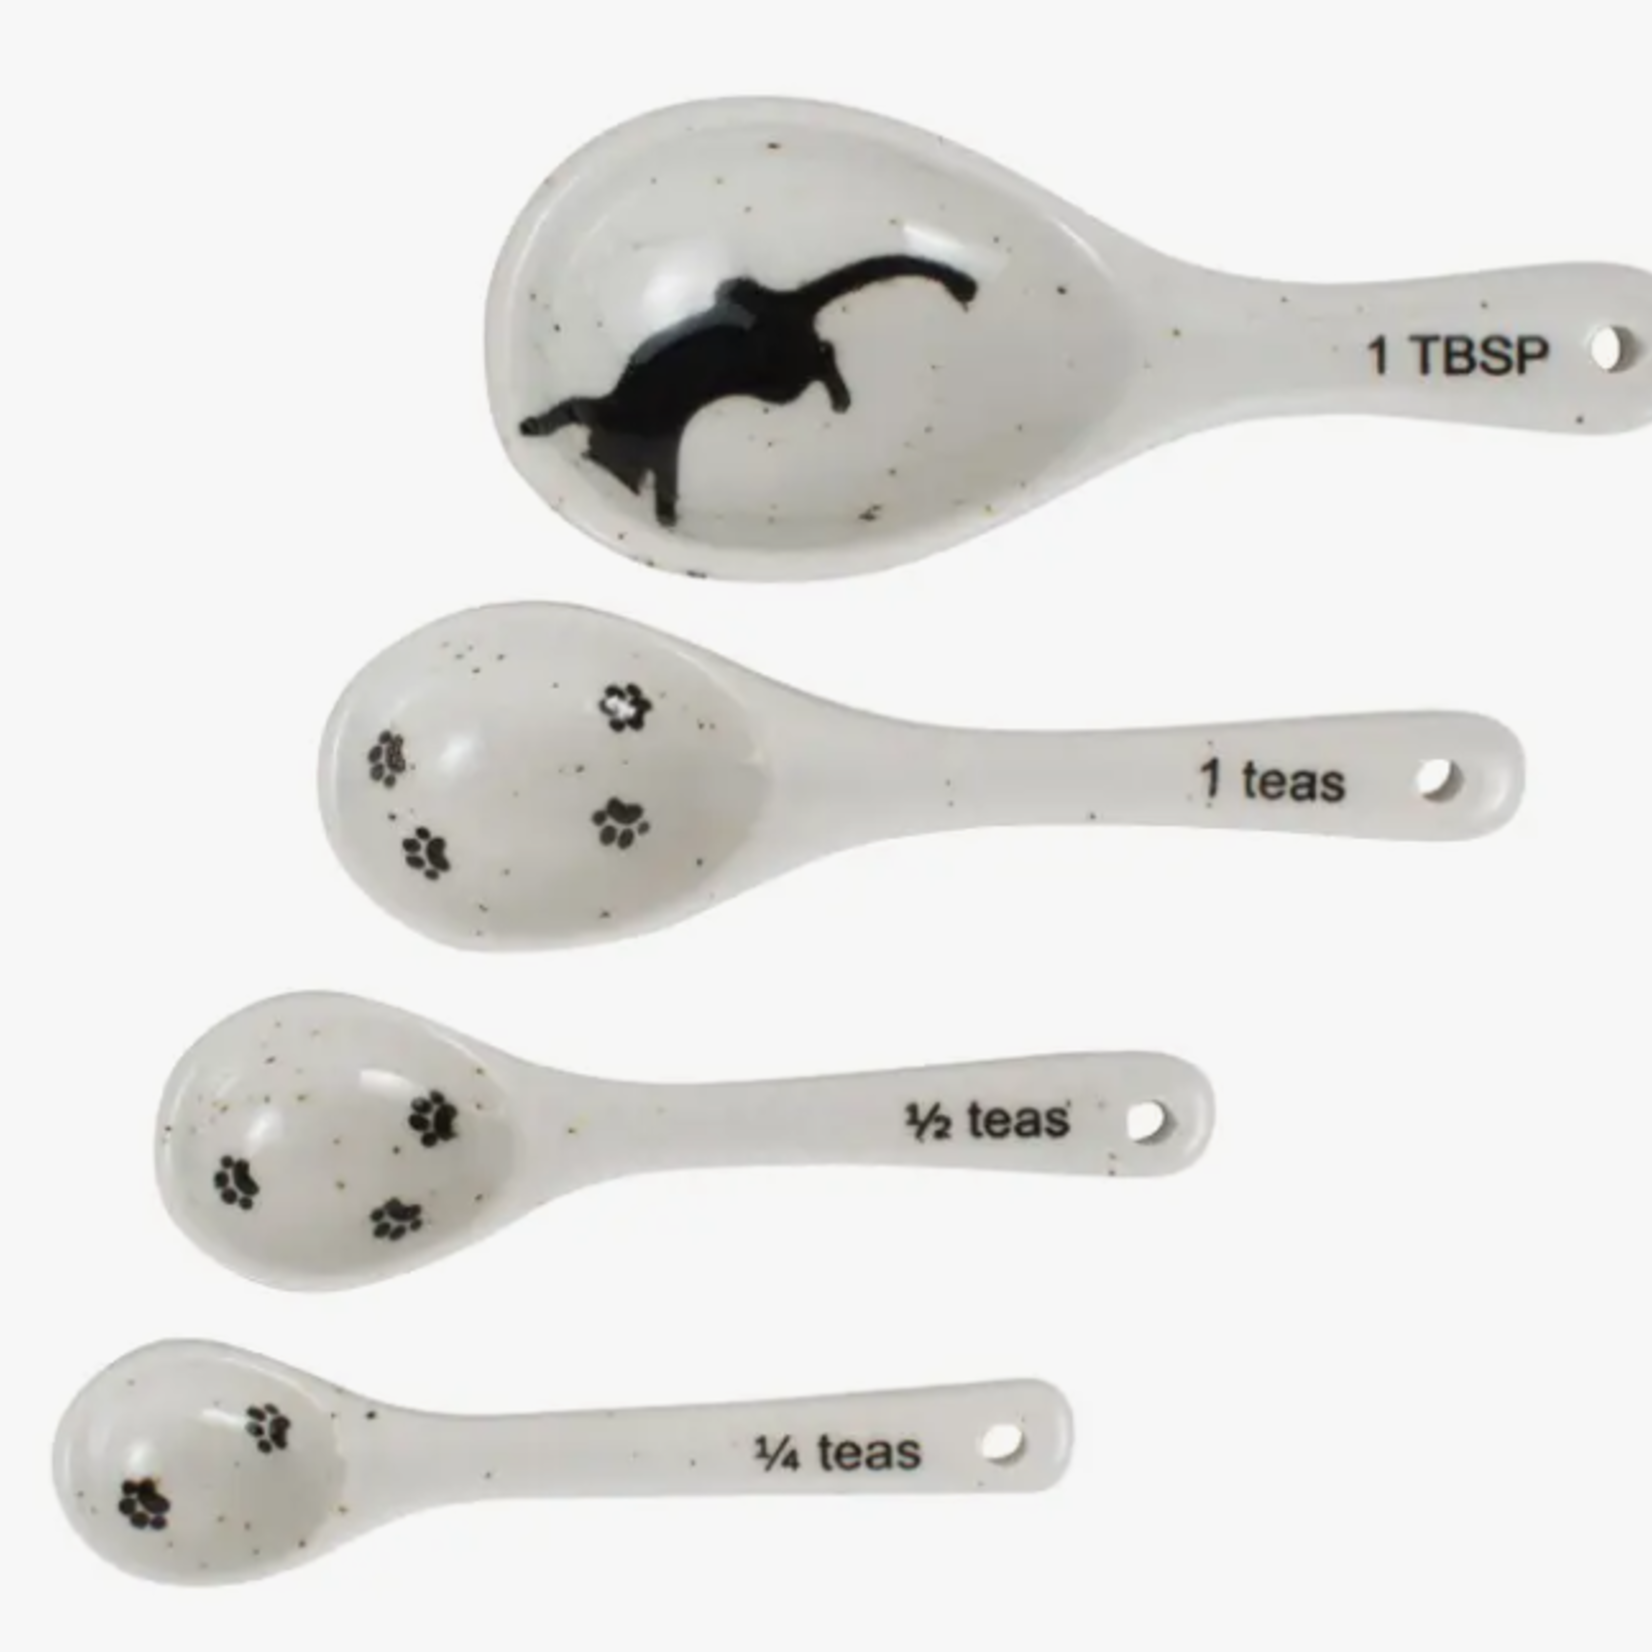 Ten Thousand Villages Handmade Kitty Prints Measuring Spoons